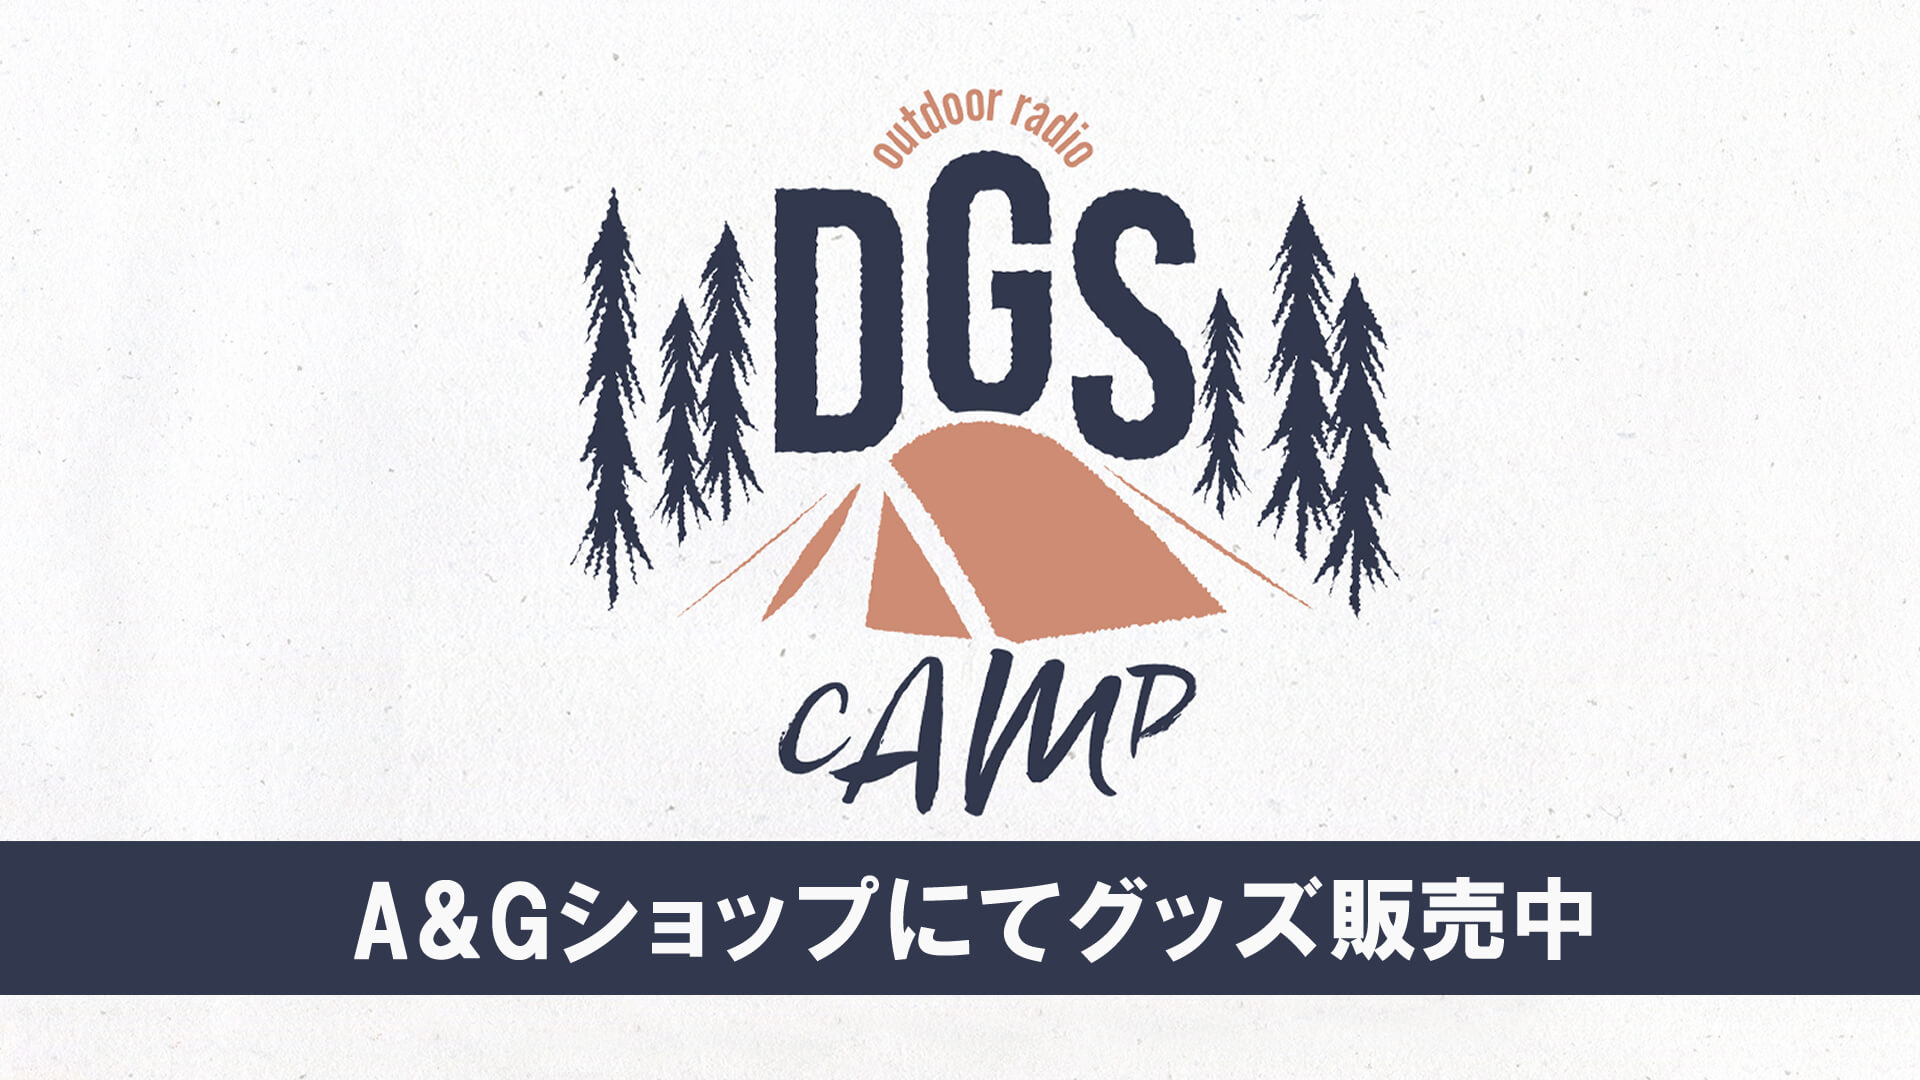 DGS CAMP グッズはA＆Gショップにて販売中！アクリルペンライトも販売開始！「神谷浩史・小野大輔のDear Girl〜Stories〜」